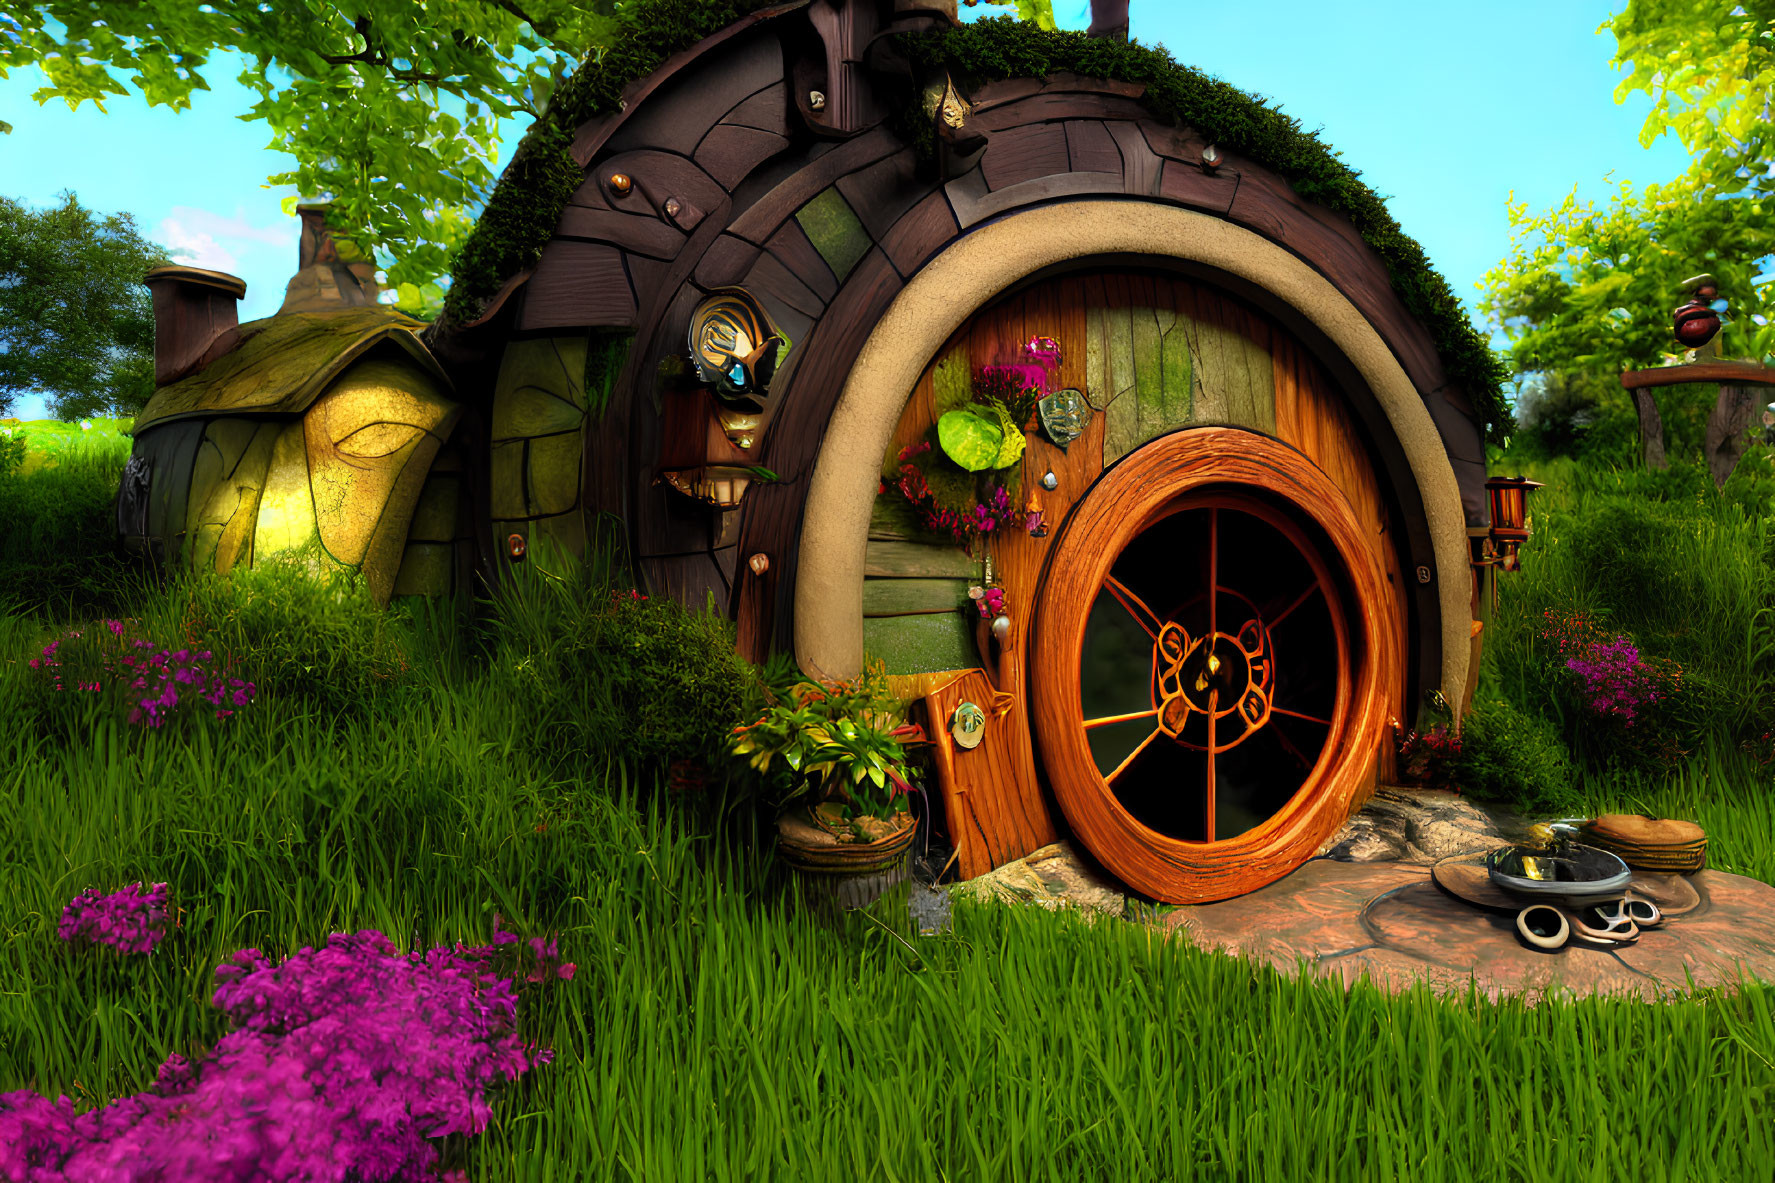 Fantasy garden scene with round wooden door and lush greenery